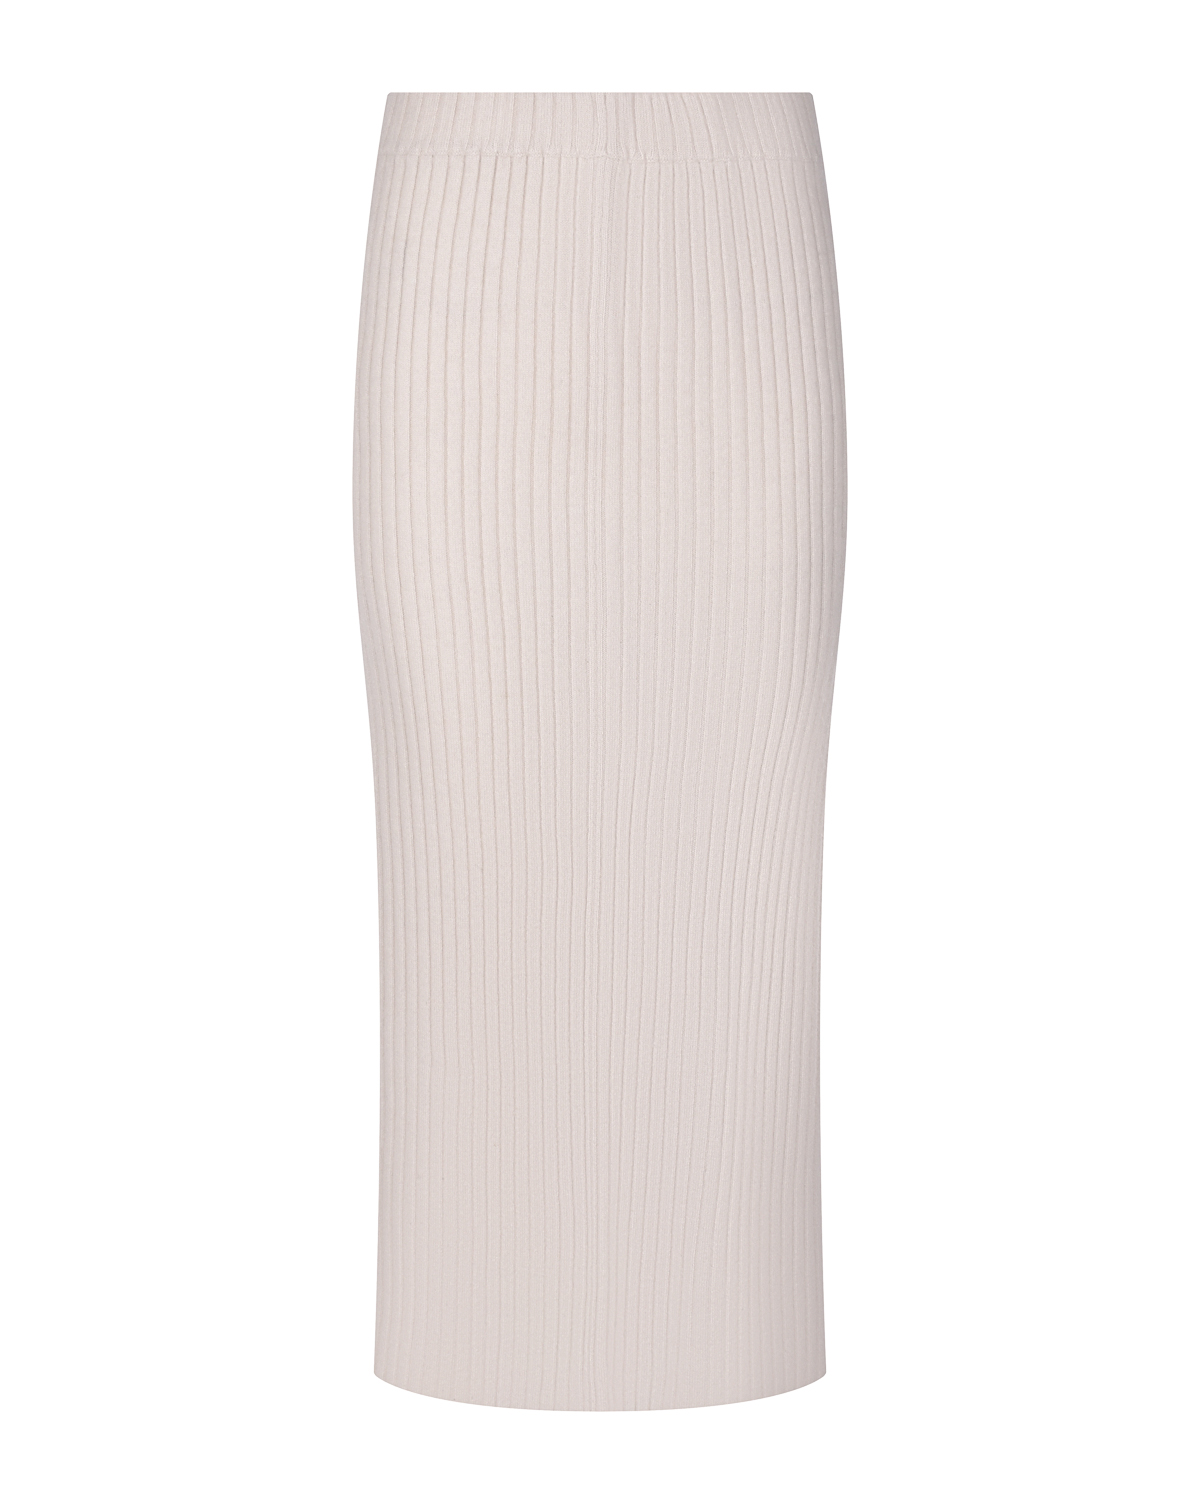 Светло-серая юбка из кашемира Allude, размер 38, цвет нет цвета - фото 1